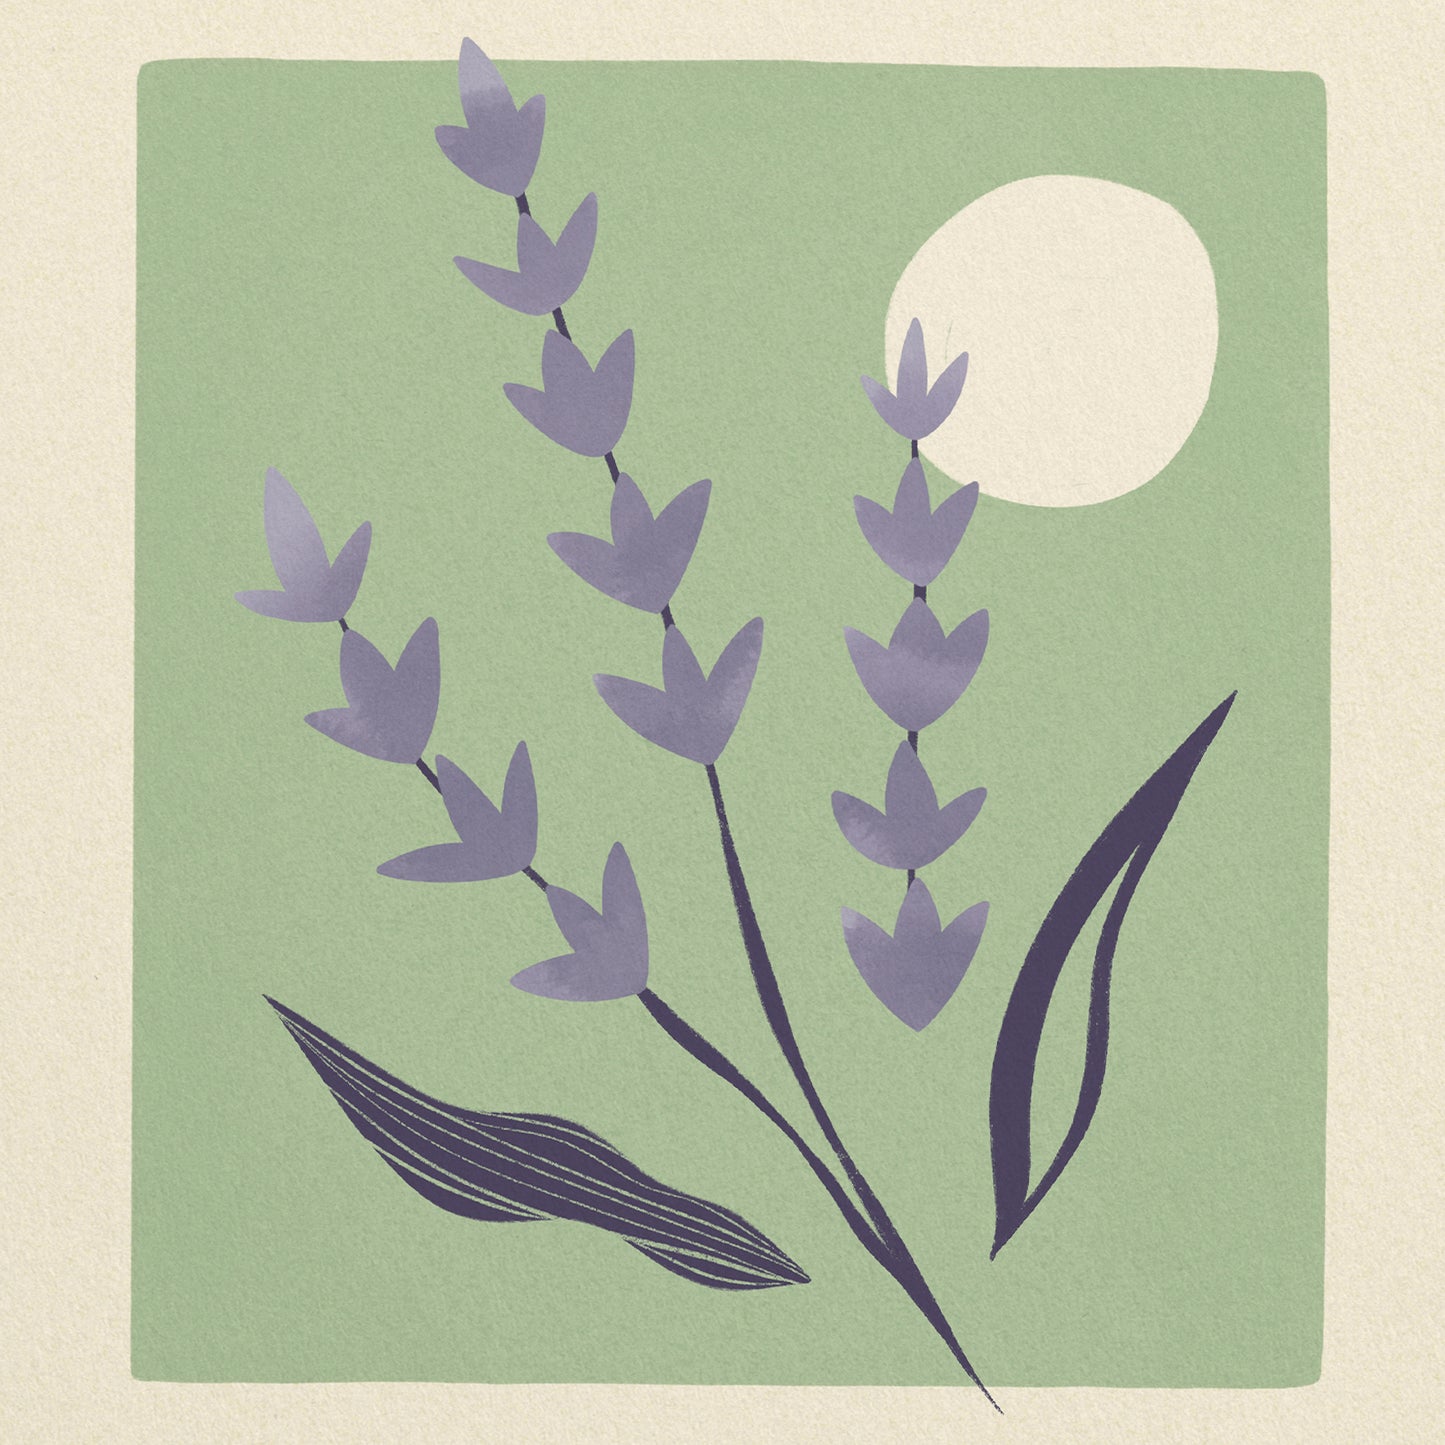 Lavender of Portugal Art Print